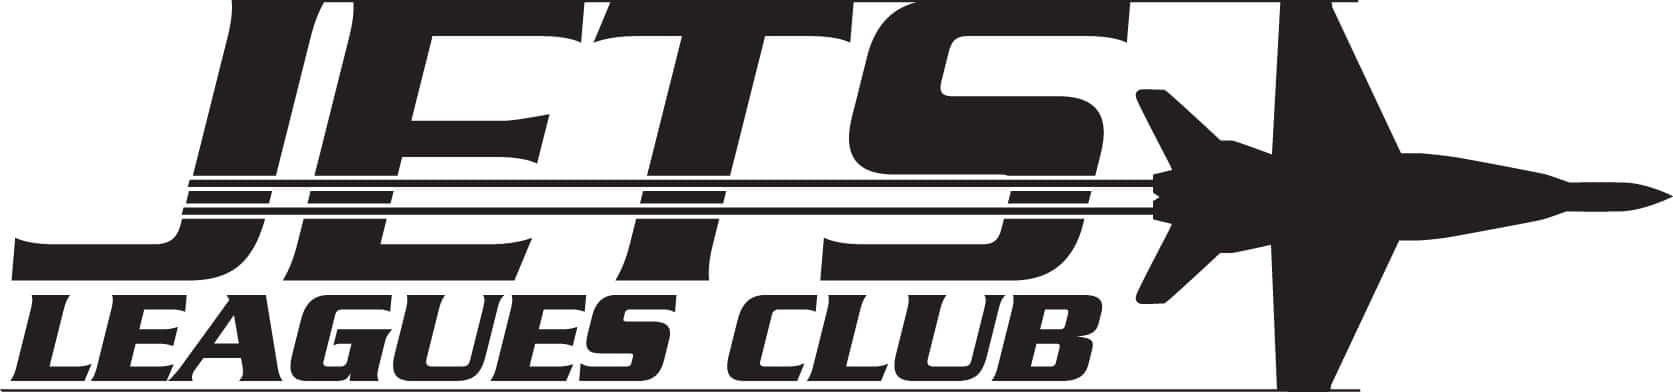 Ipswich Jets Leagues Club logo